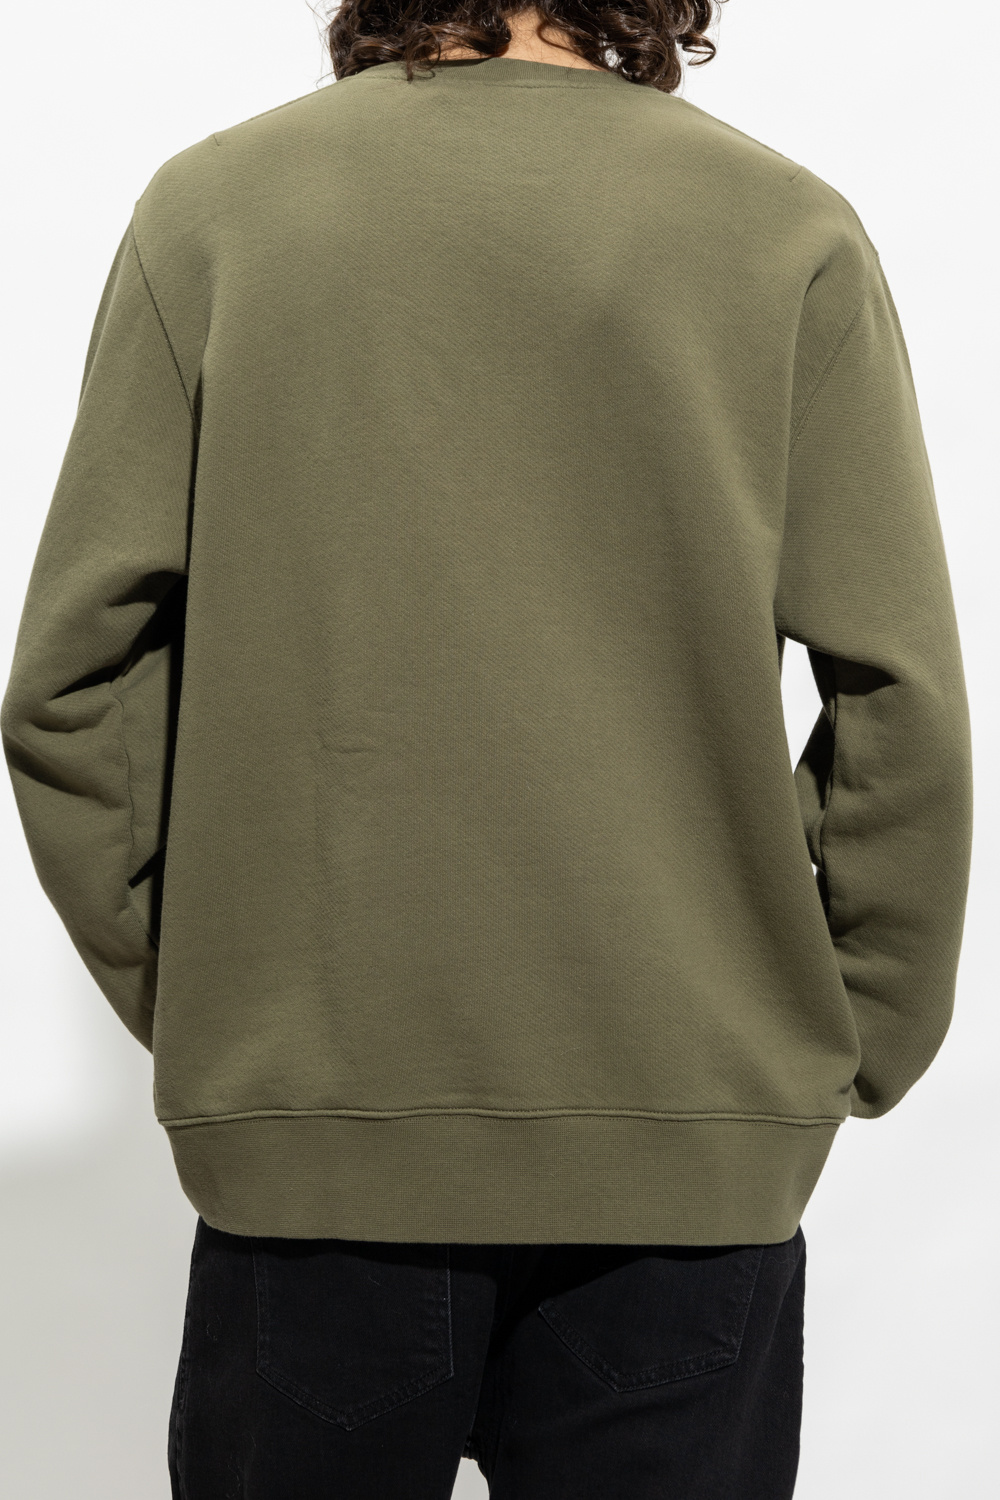 Iro Diag Outline logo-print sweatshirt